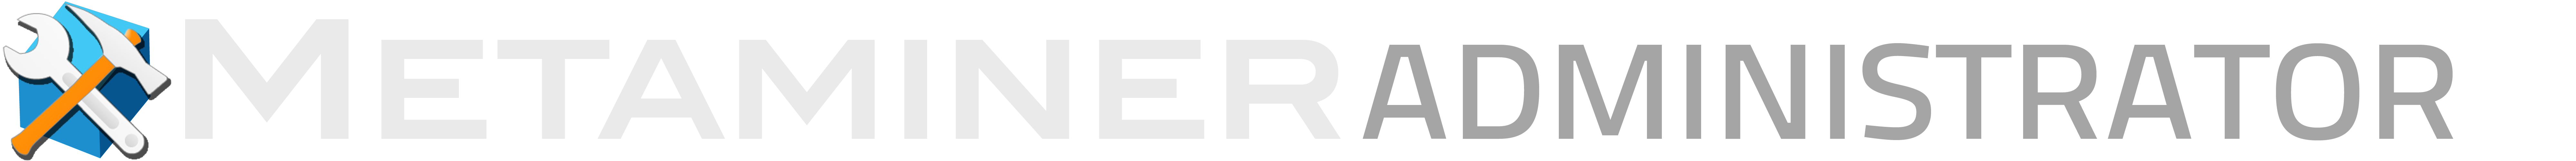 MetaMiner Tableau Edition Logo